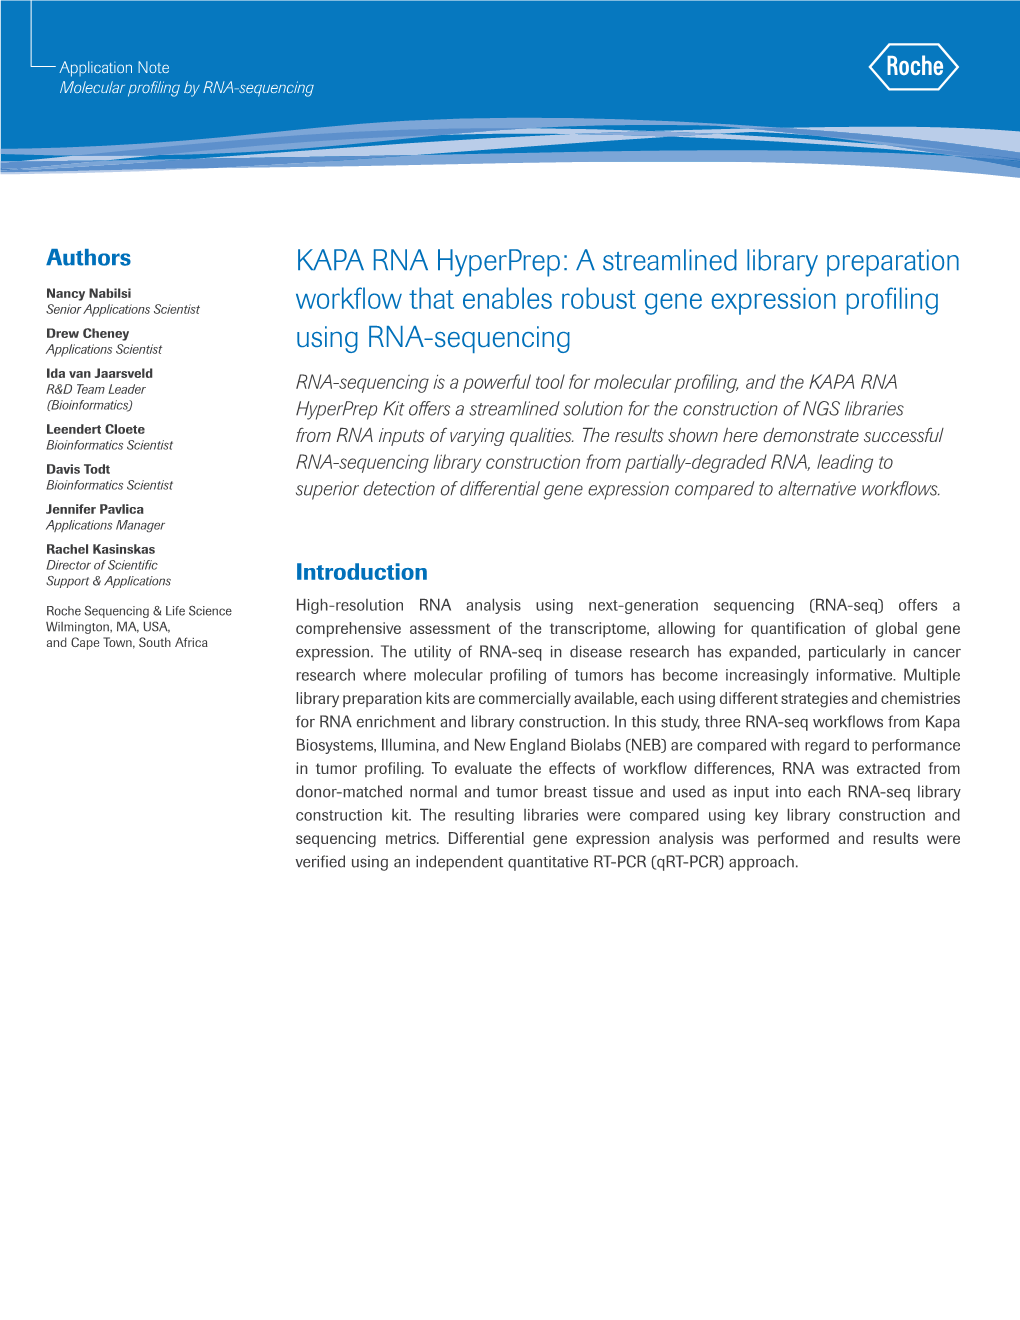 Molecular Profiling by RNA Sequencing